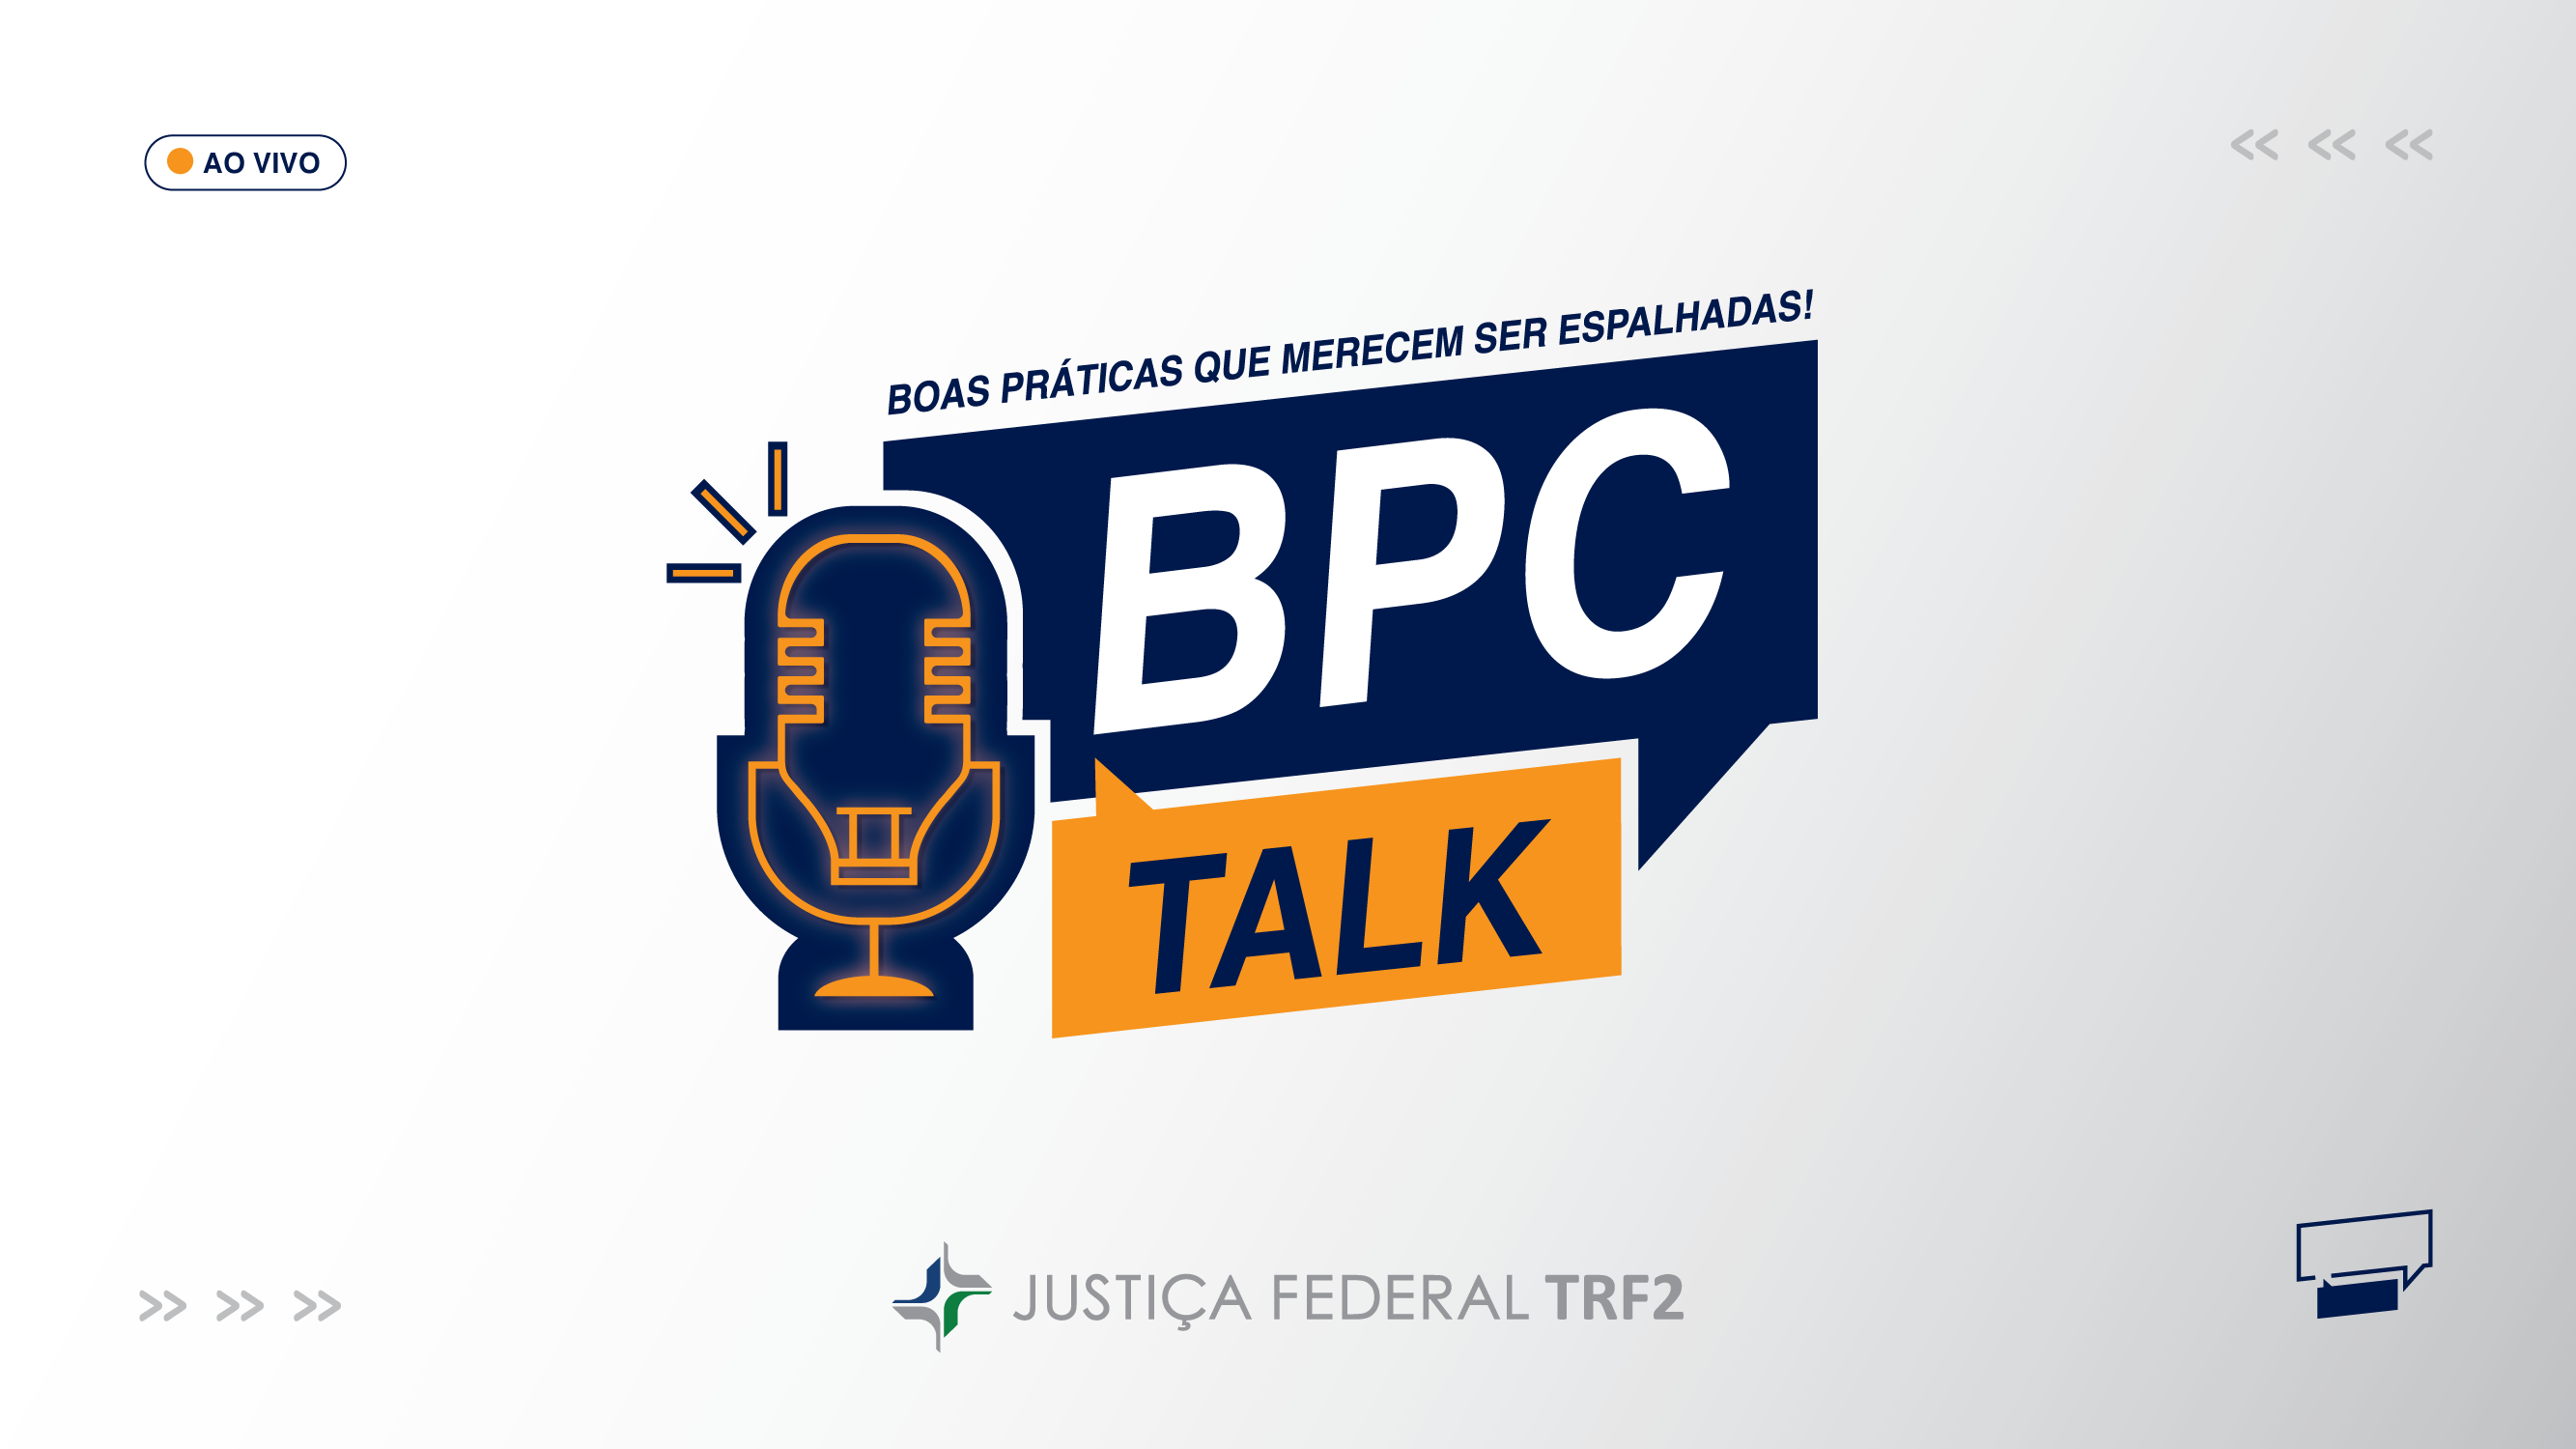 Saiba mais sobre o BPC Talk